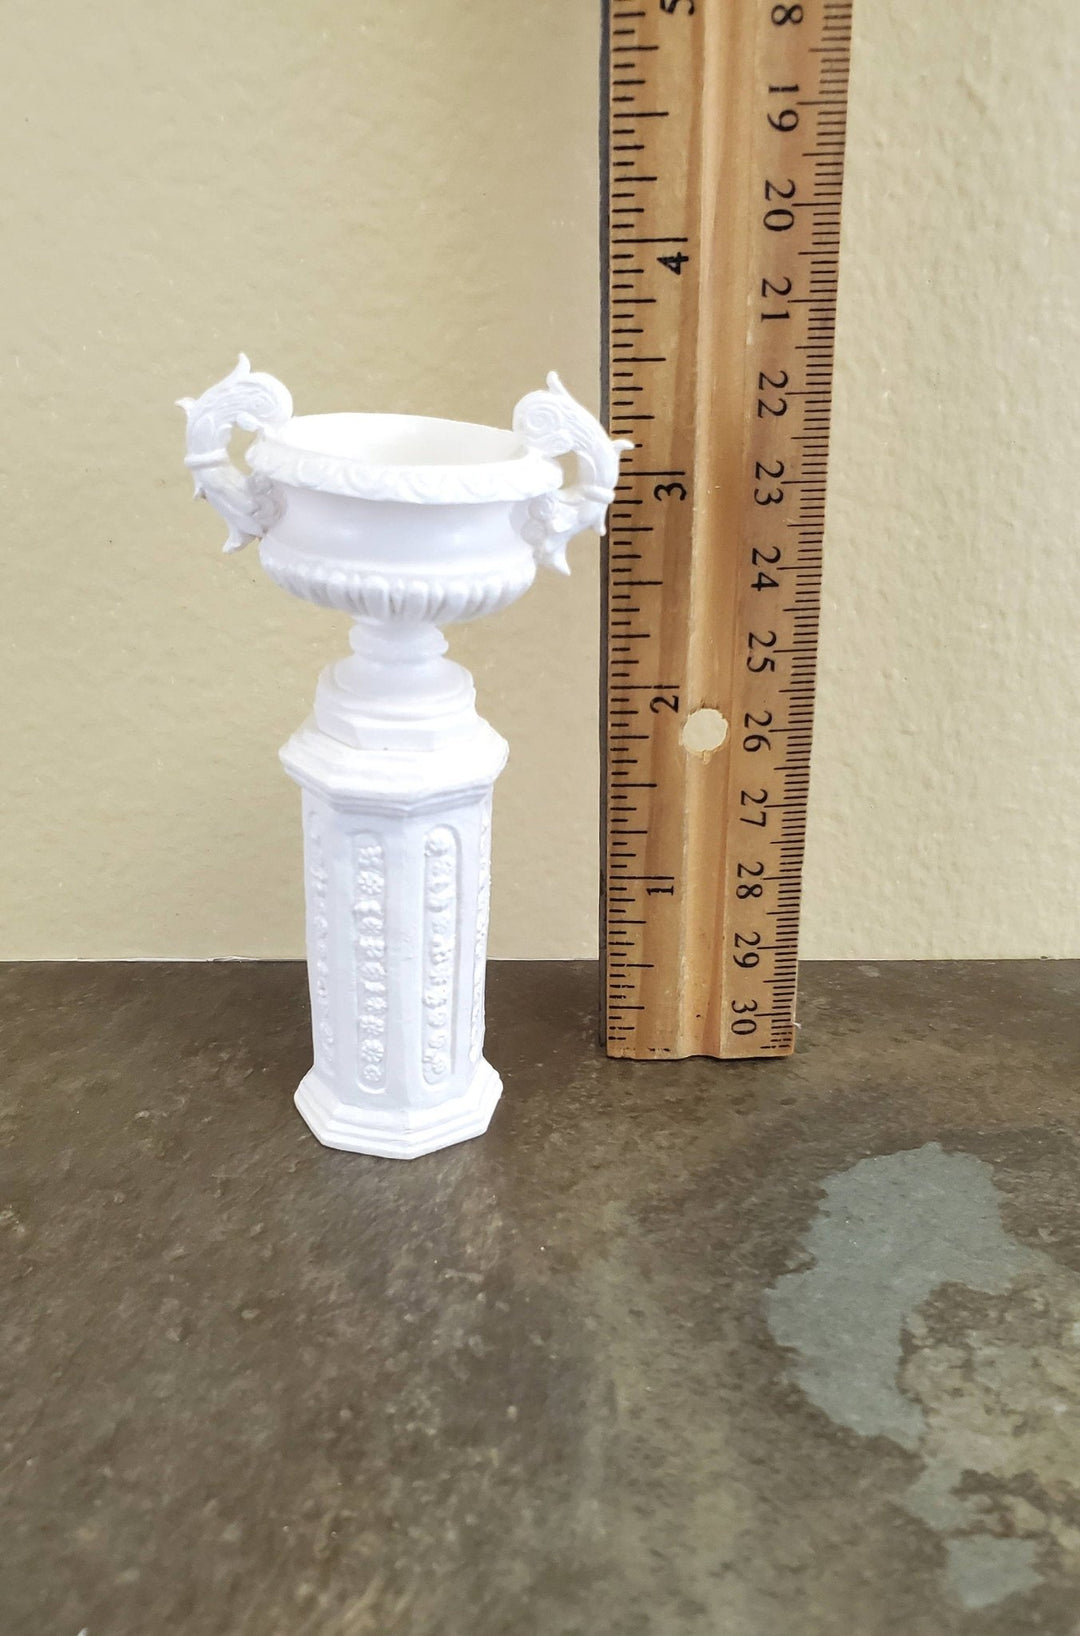 Dollhouse Miniature Pedestal Plant Stand w/ 2 Handled Urn Cast Resin 1:12 Scale White - Miniature Crush